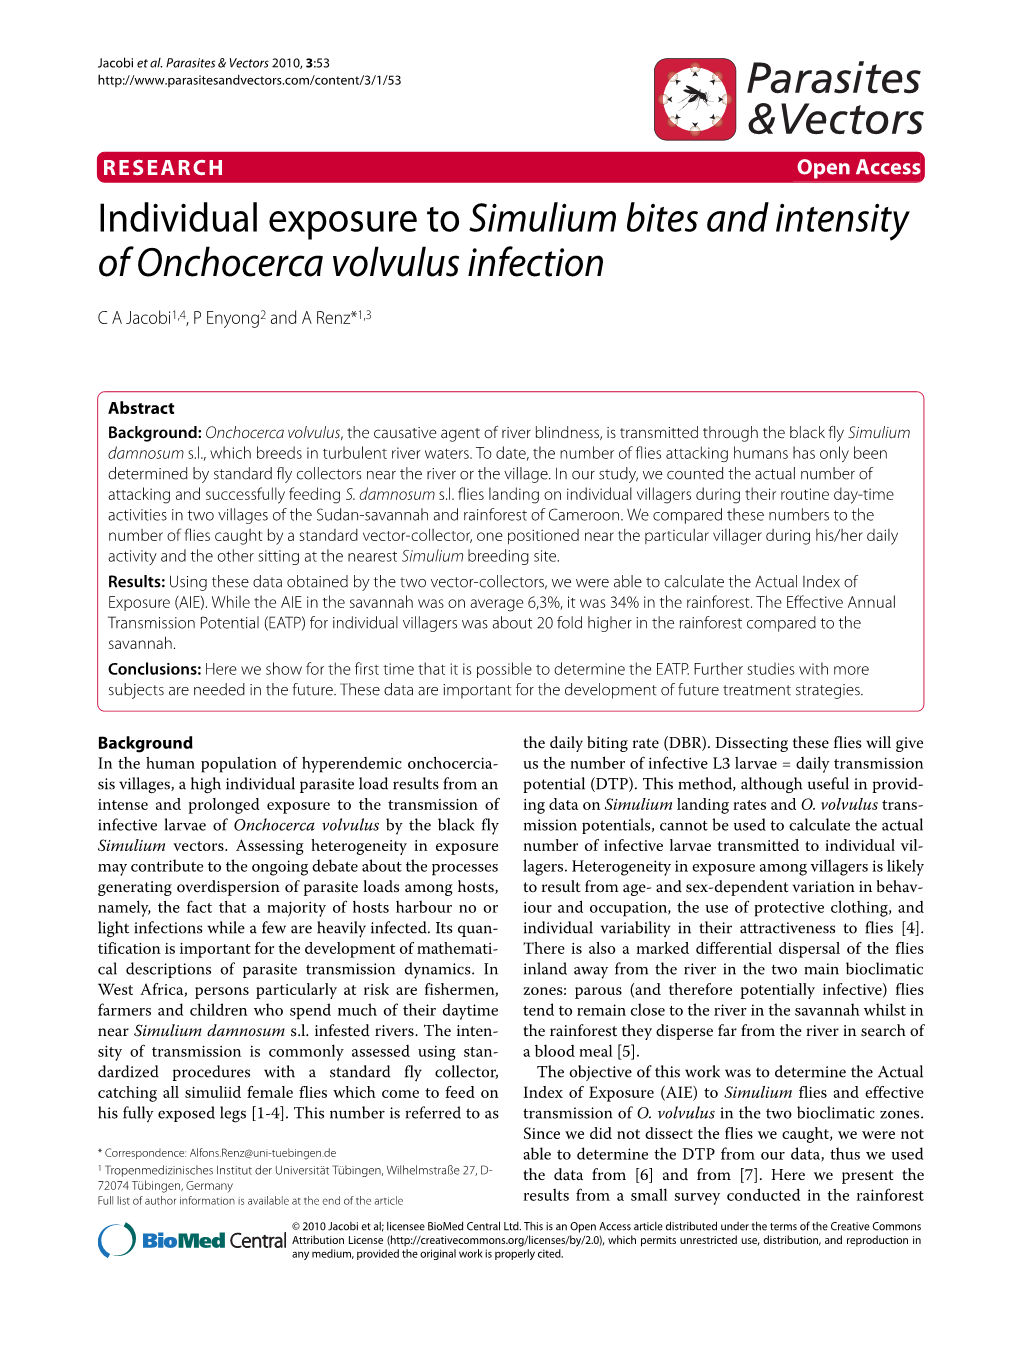 Individual Exposure to Simulium Bites and Intensity of Onchocerca